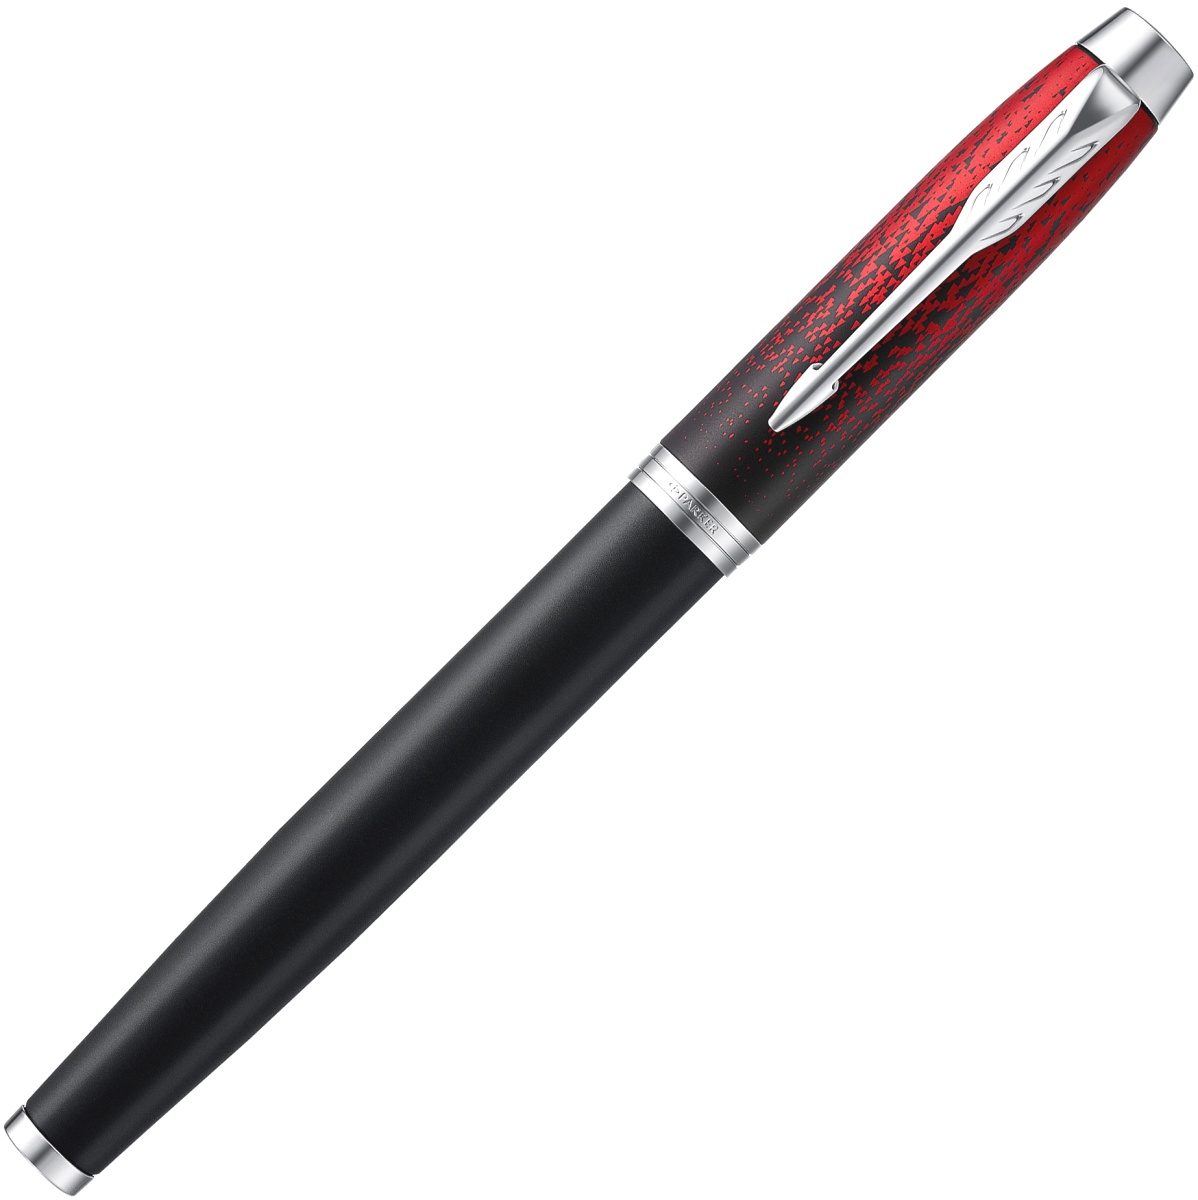  Ручка перьевая Parker IM Core 2019 SE F320, Red Ignite (Перо F), фото 2